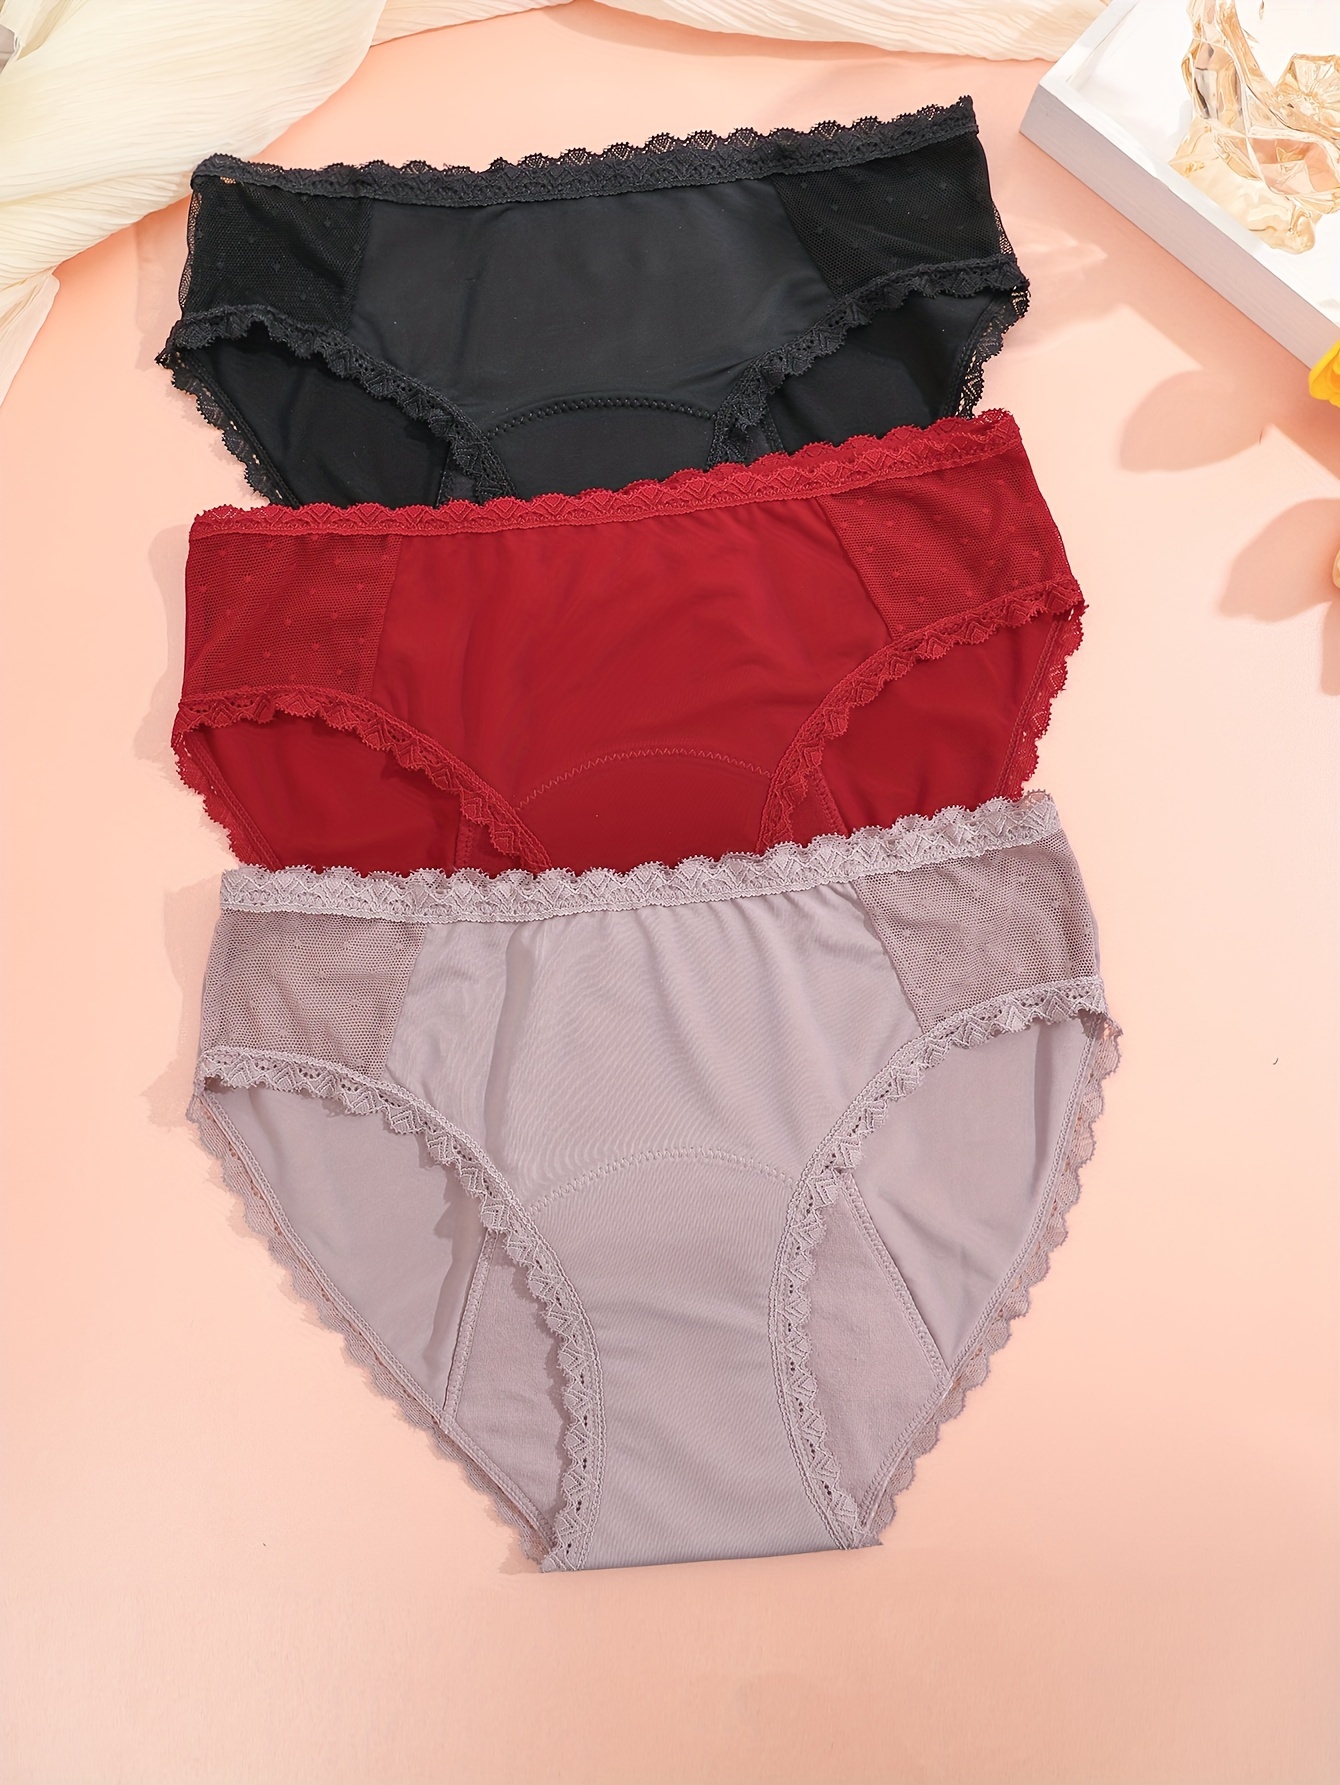 B.Peachy Hi-Waist Brief Period Underwear, Women's absorbent leak-proof period  panties